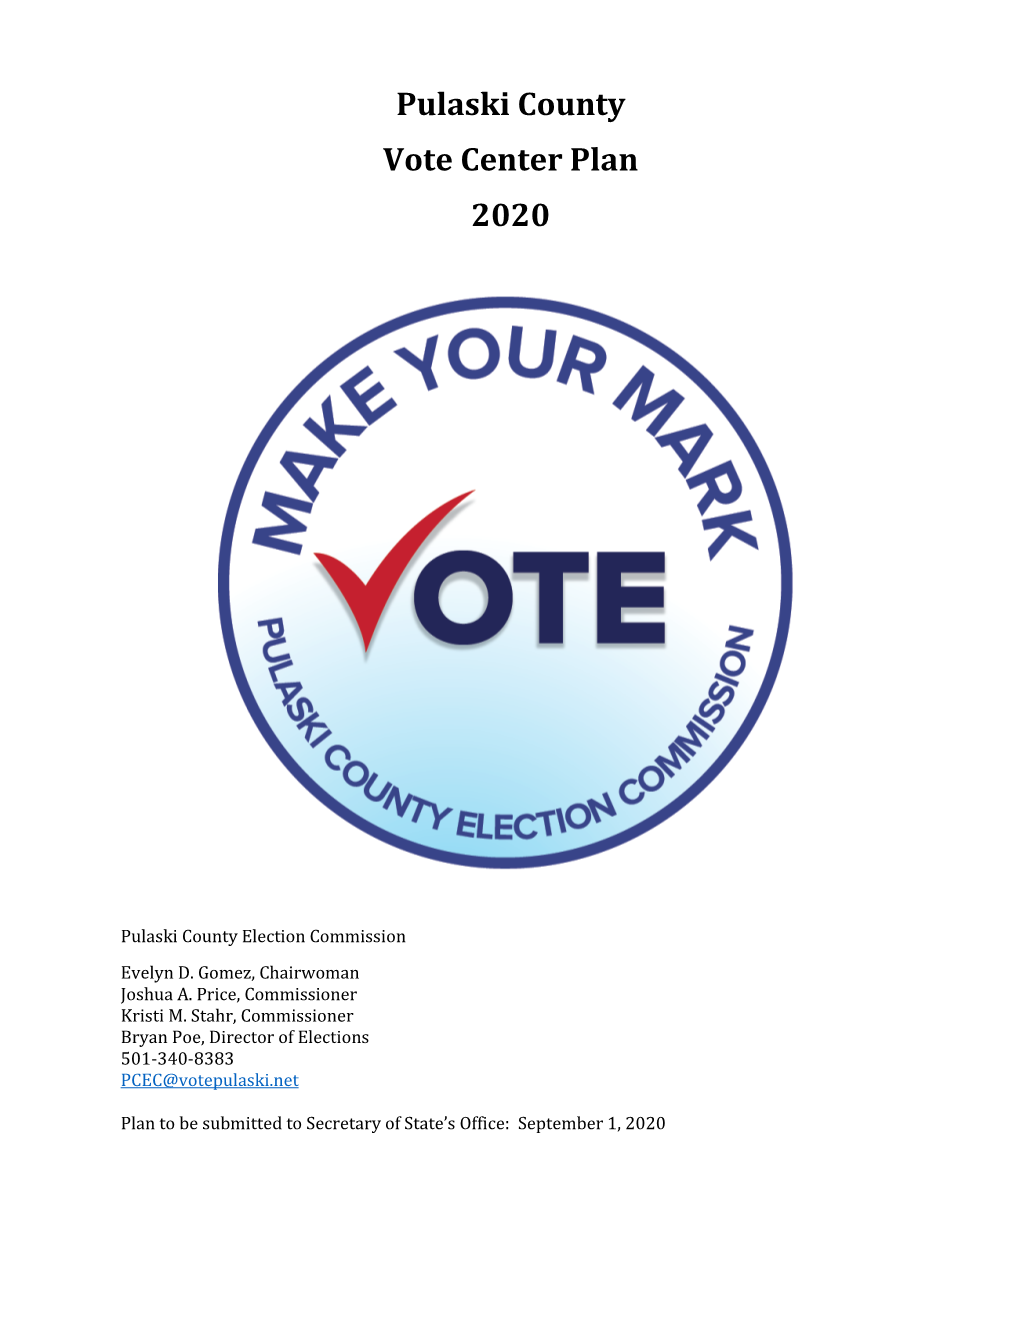 Pulaski County Vote Center Plan 2020